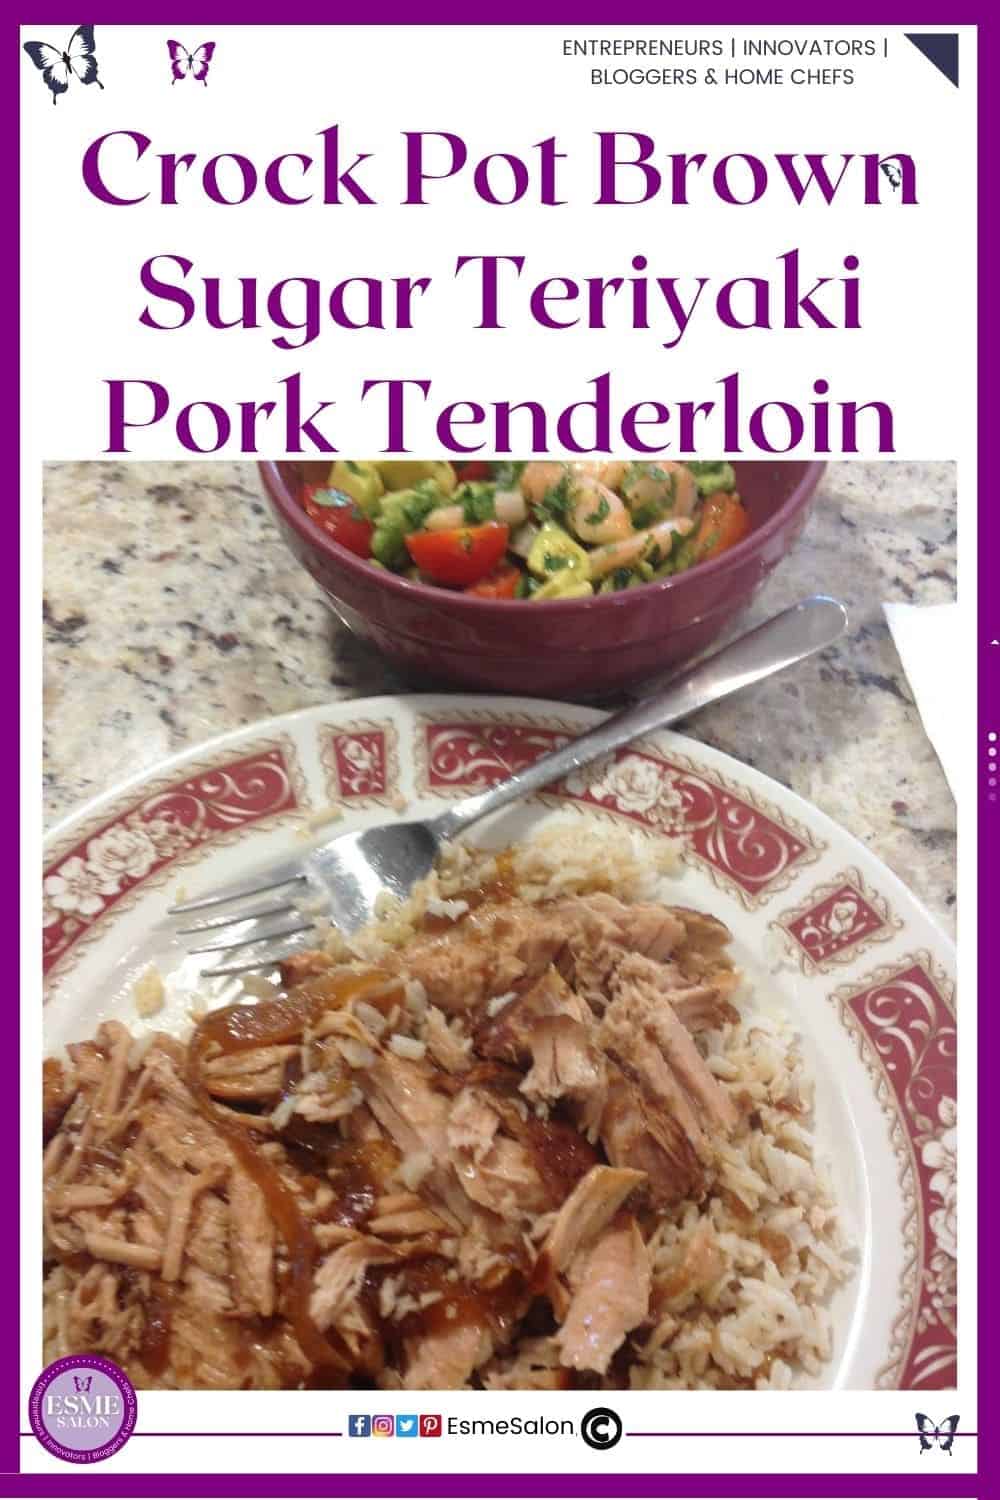 Crock Pot Brown Sugar Teriyaki Pork Tenderloin made in the Crock Pot with a salad in the side